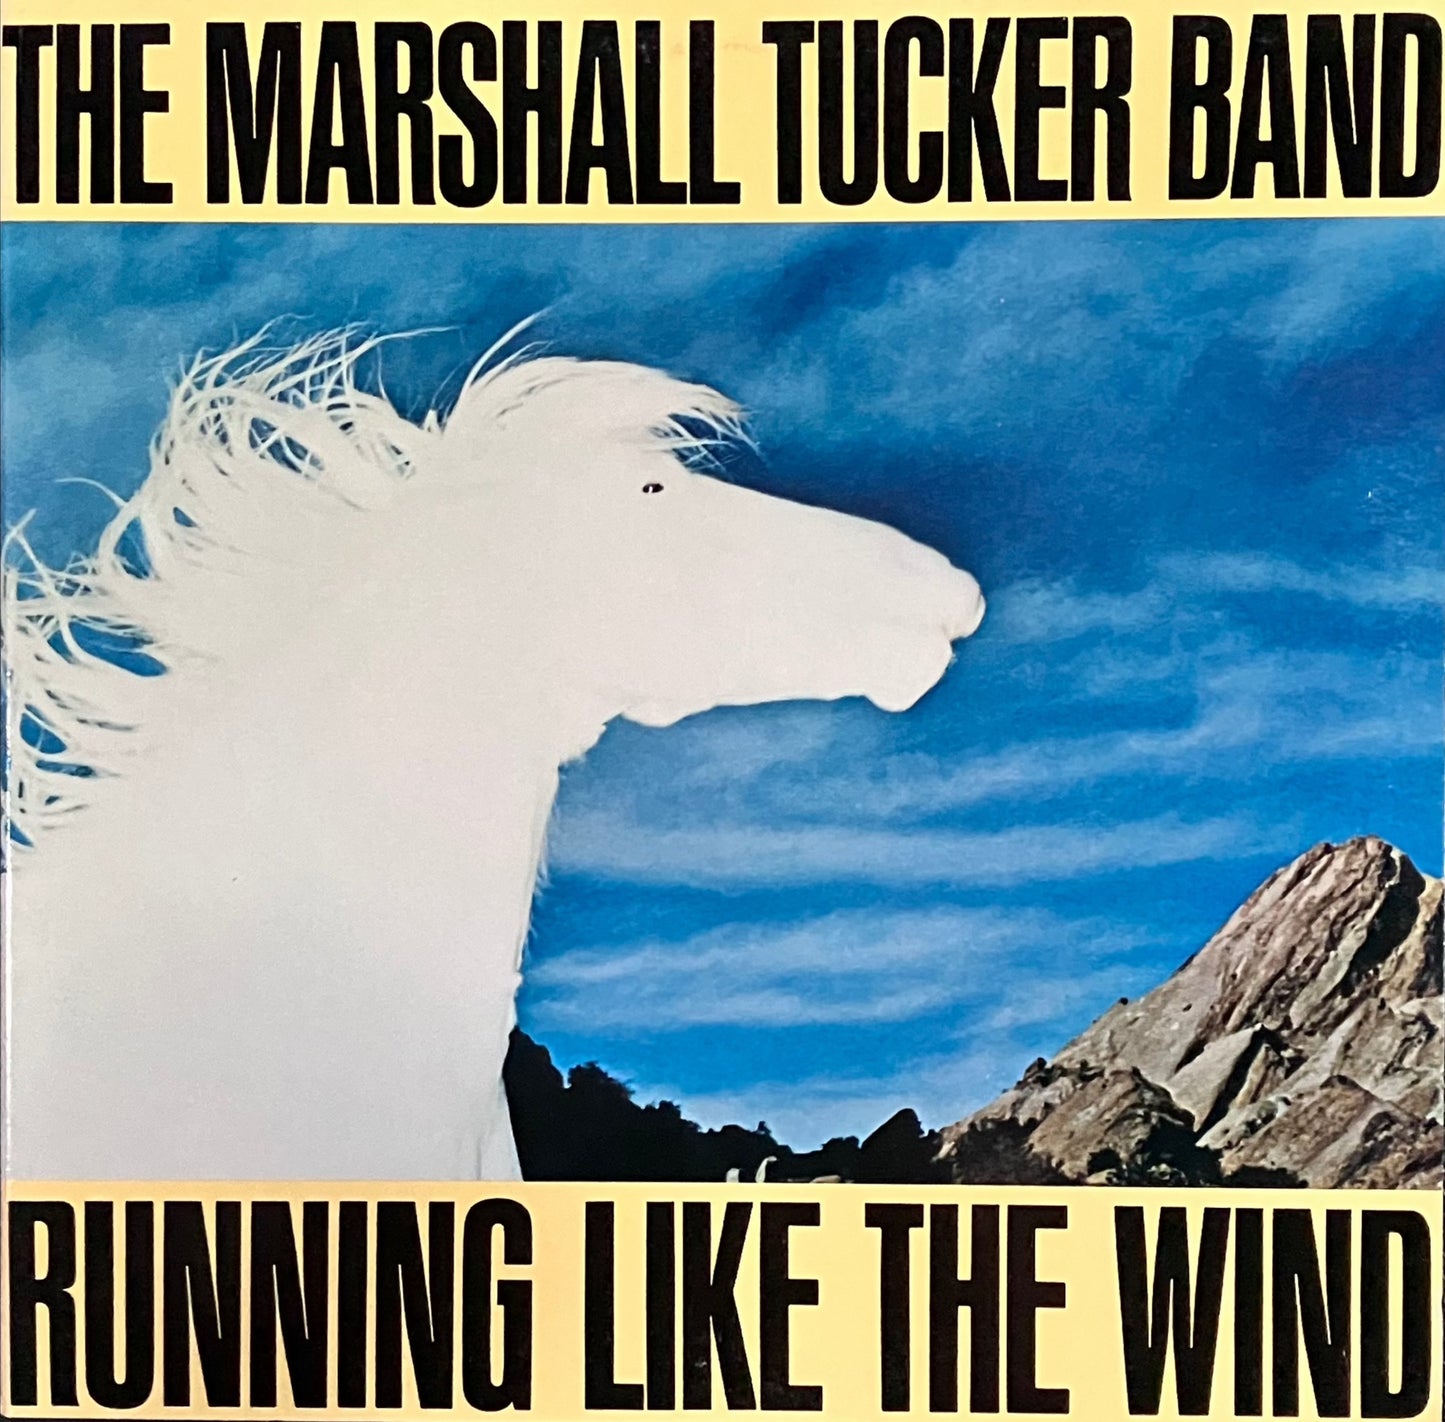 The Marshall Tucker Band – Running Like The Wind